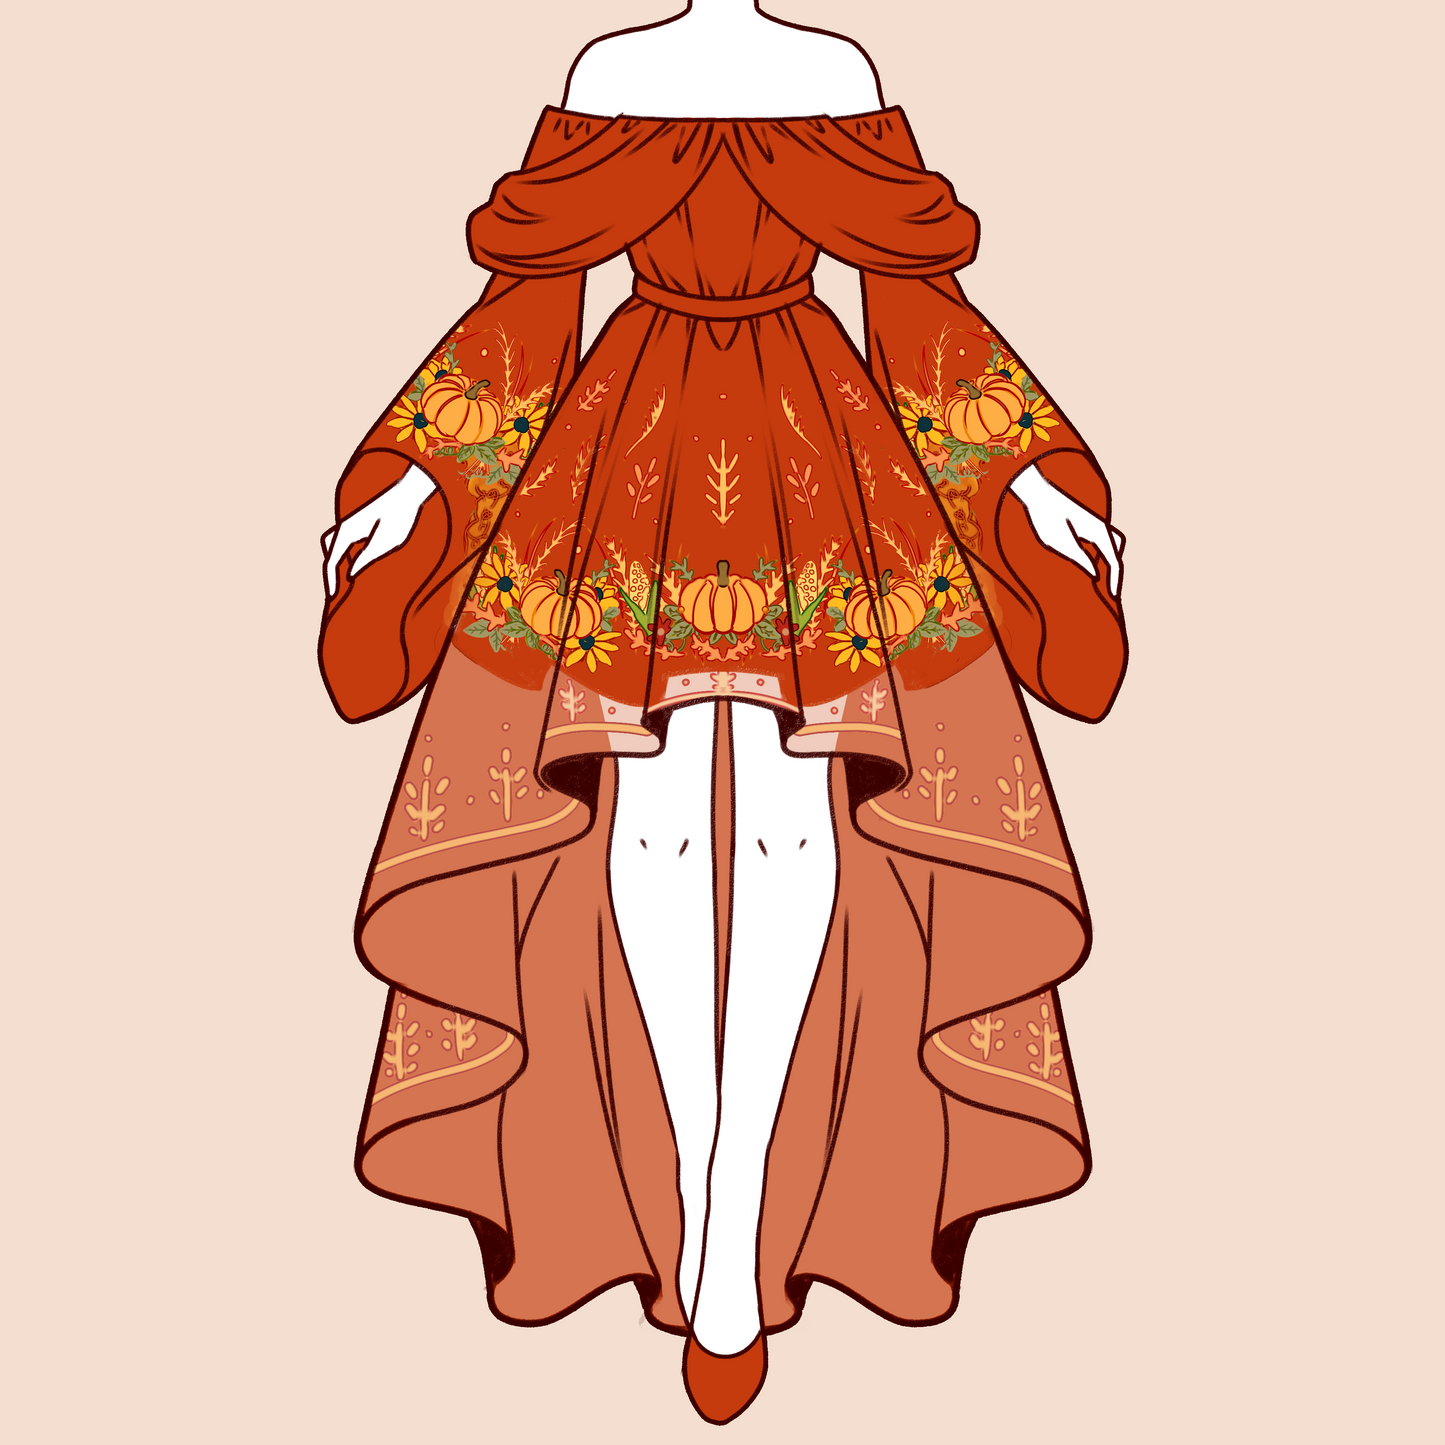 [INTEREST CHECK] Autumn Harvest Dress